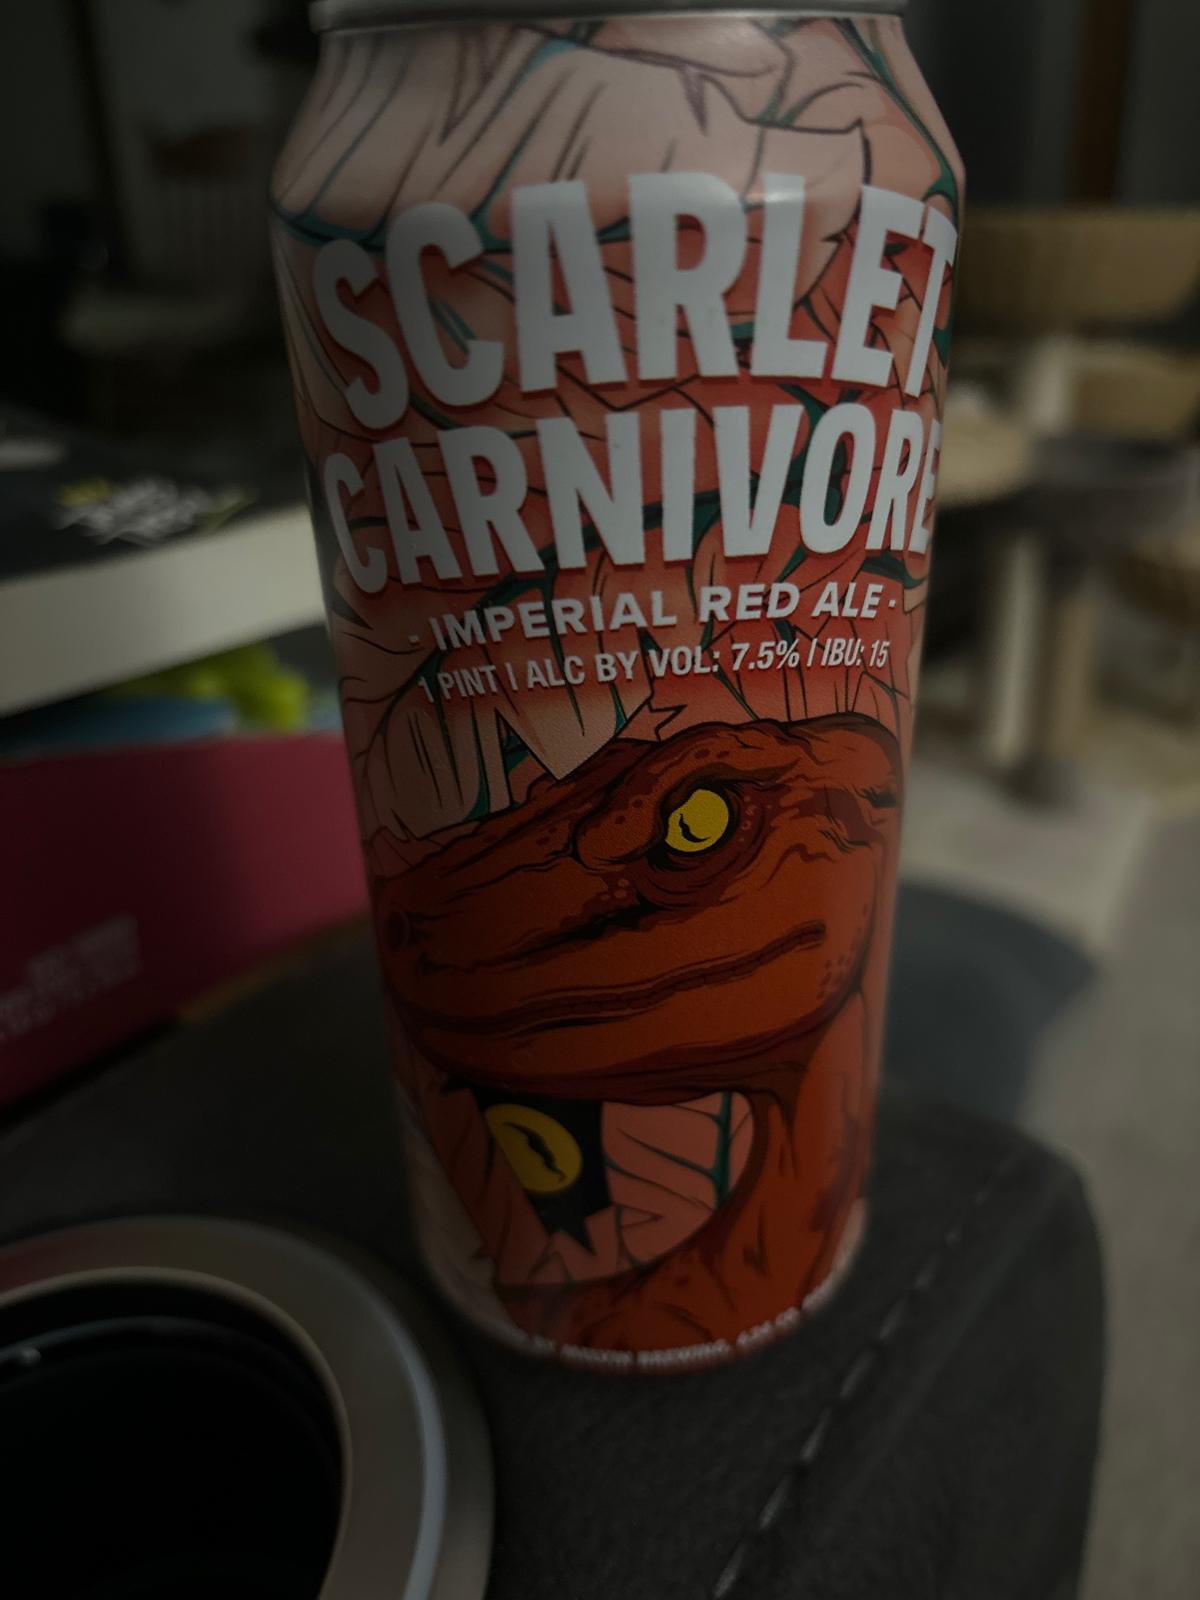 Scarlet Carnivore